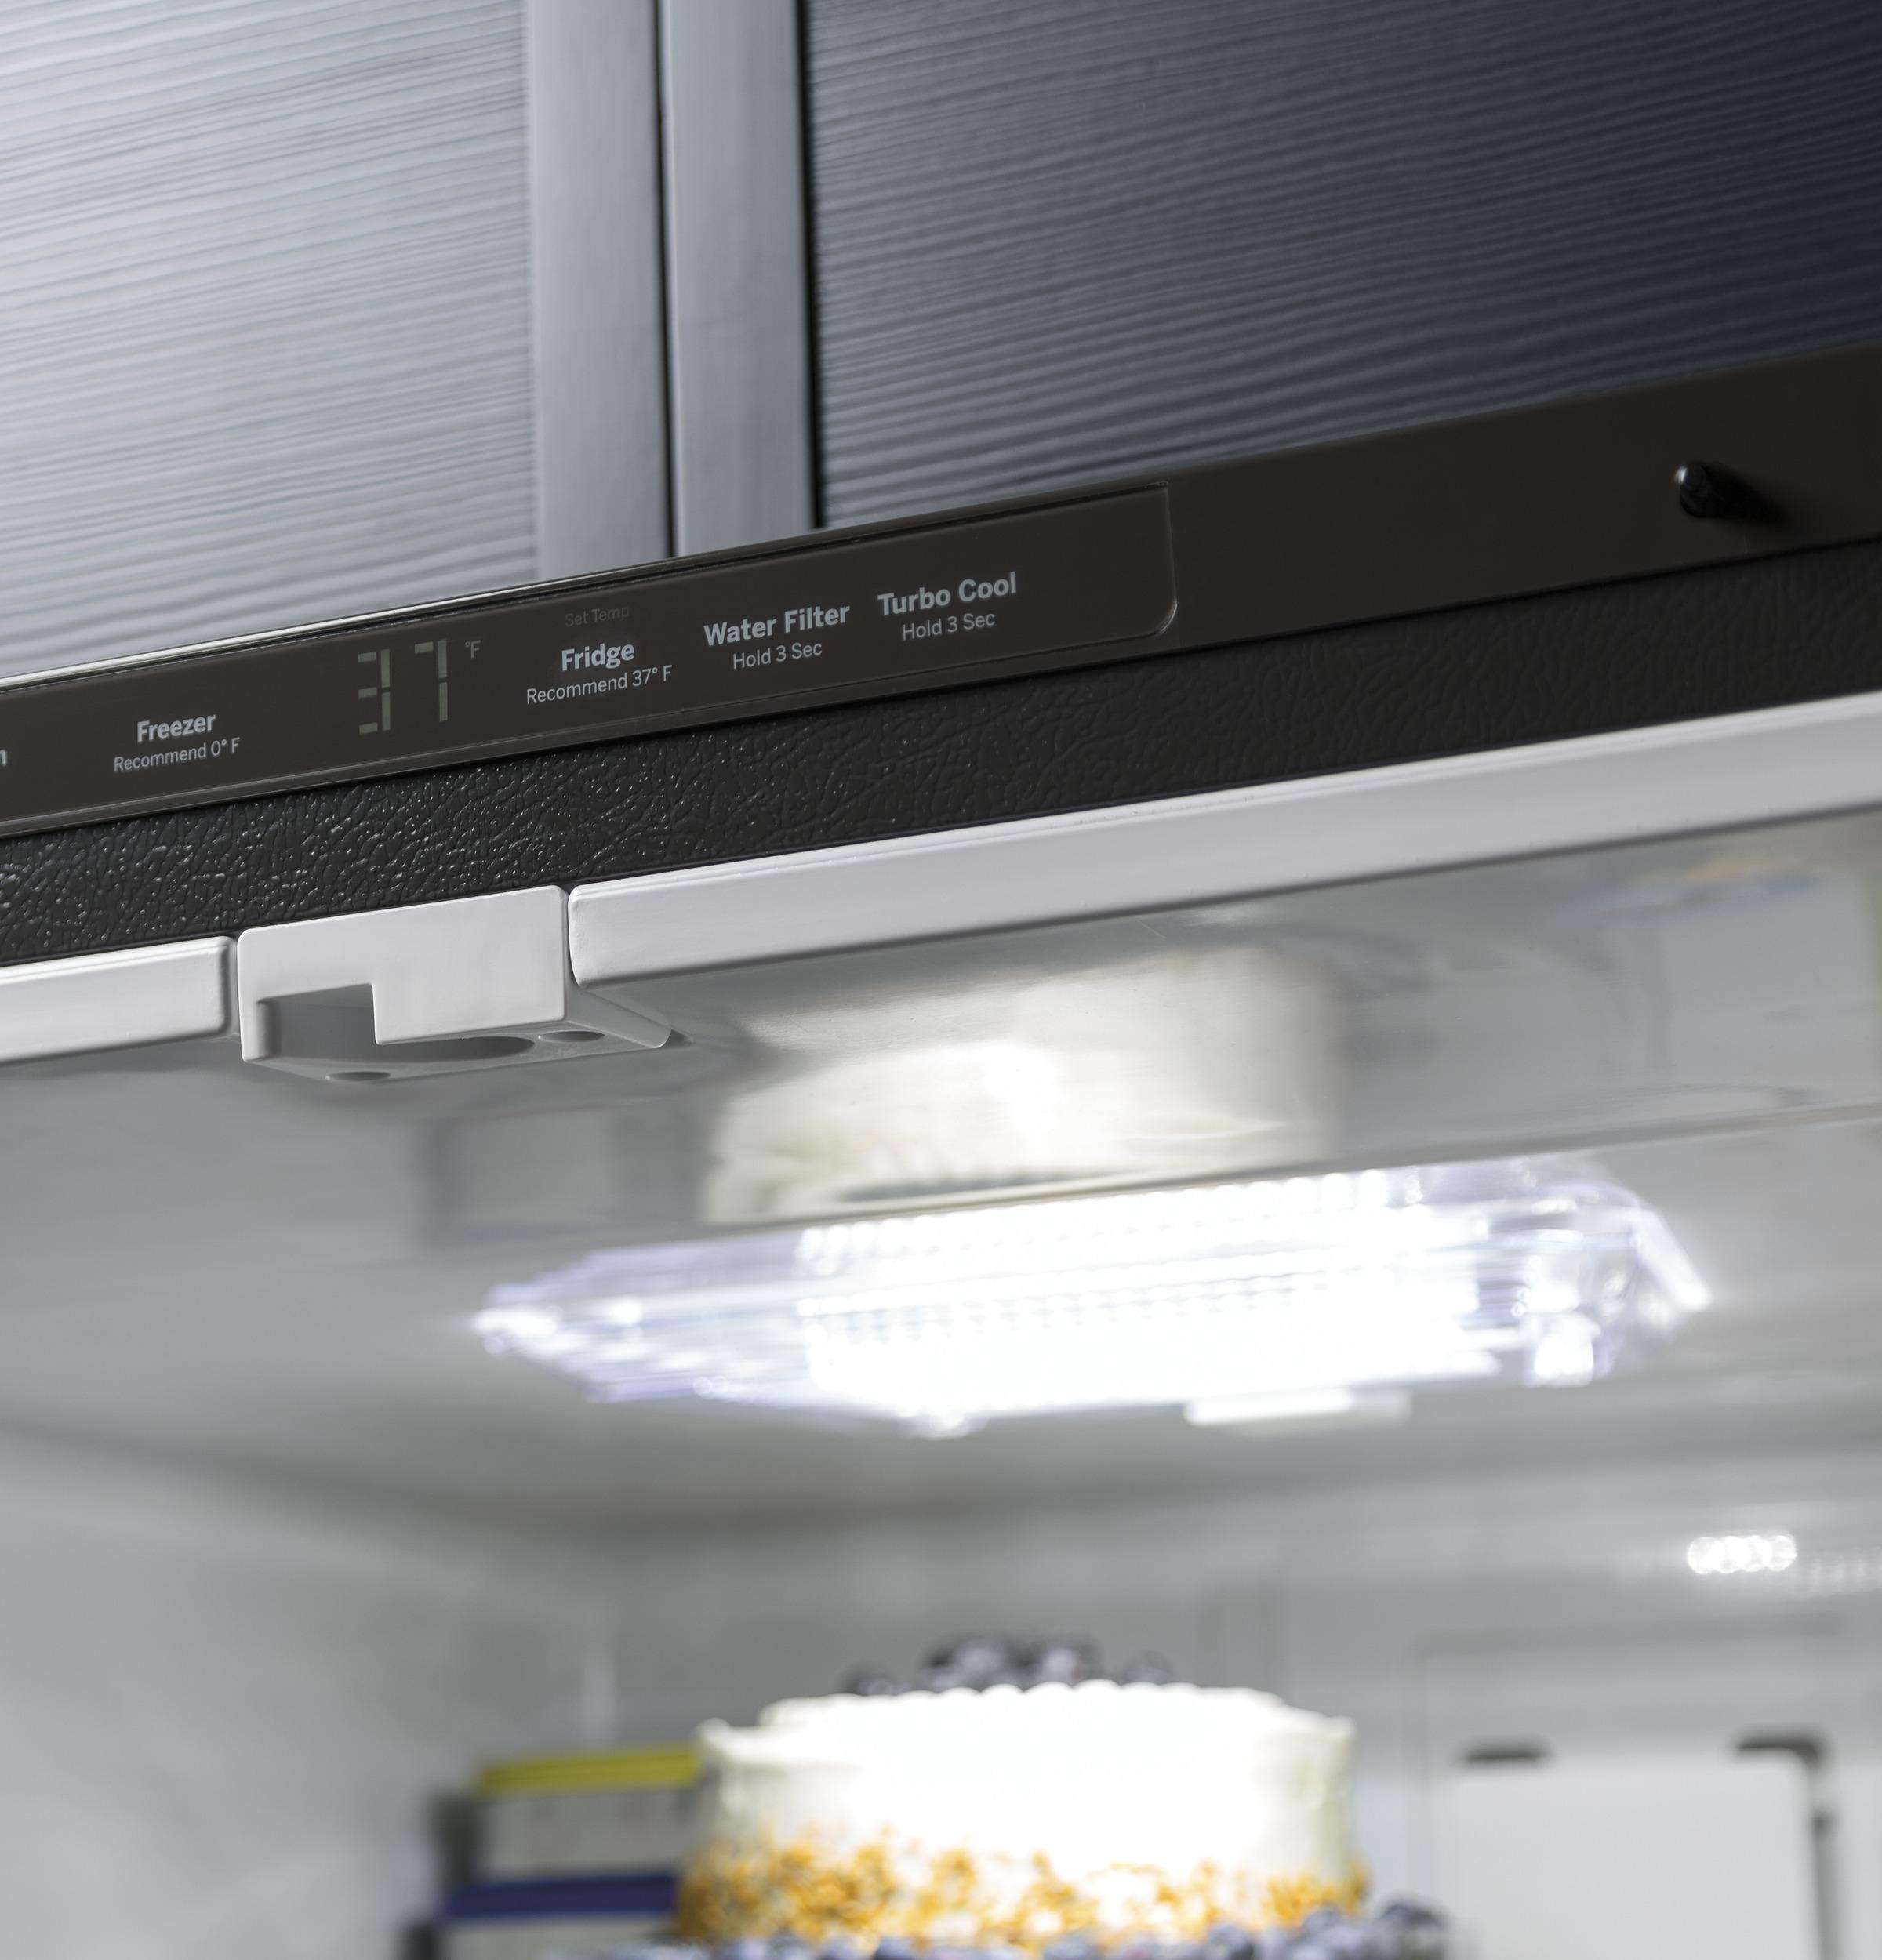 GE® ENERGY STAR® 18.6 Cu. Ft. Counter-Depth French-Door Refrigerator